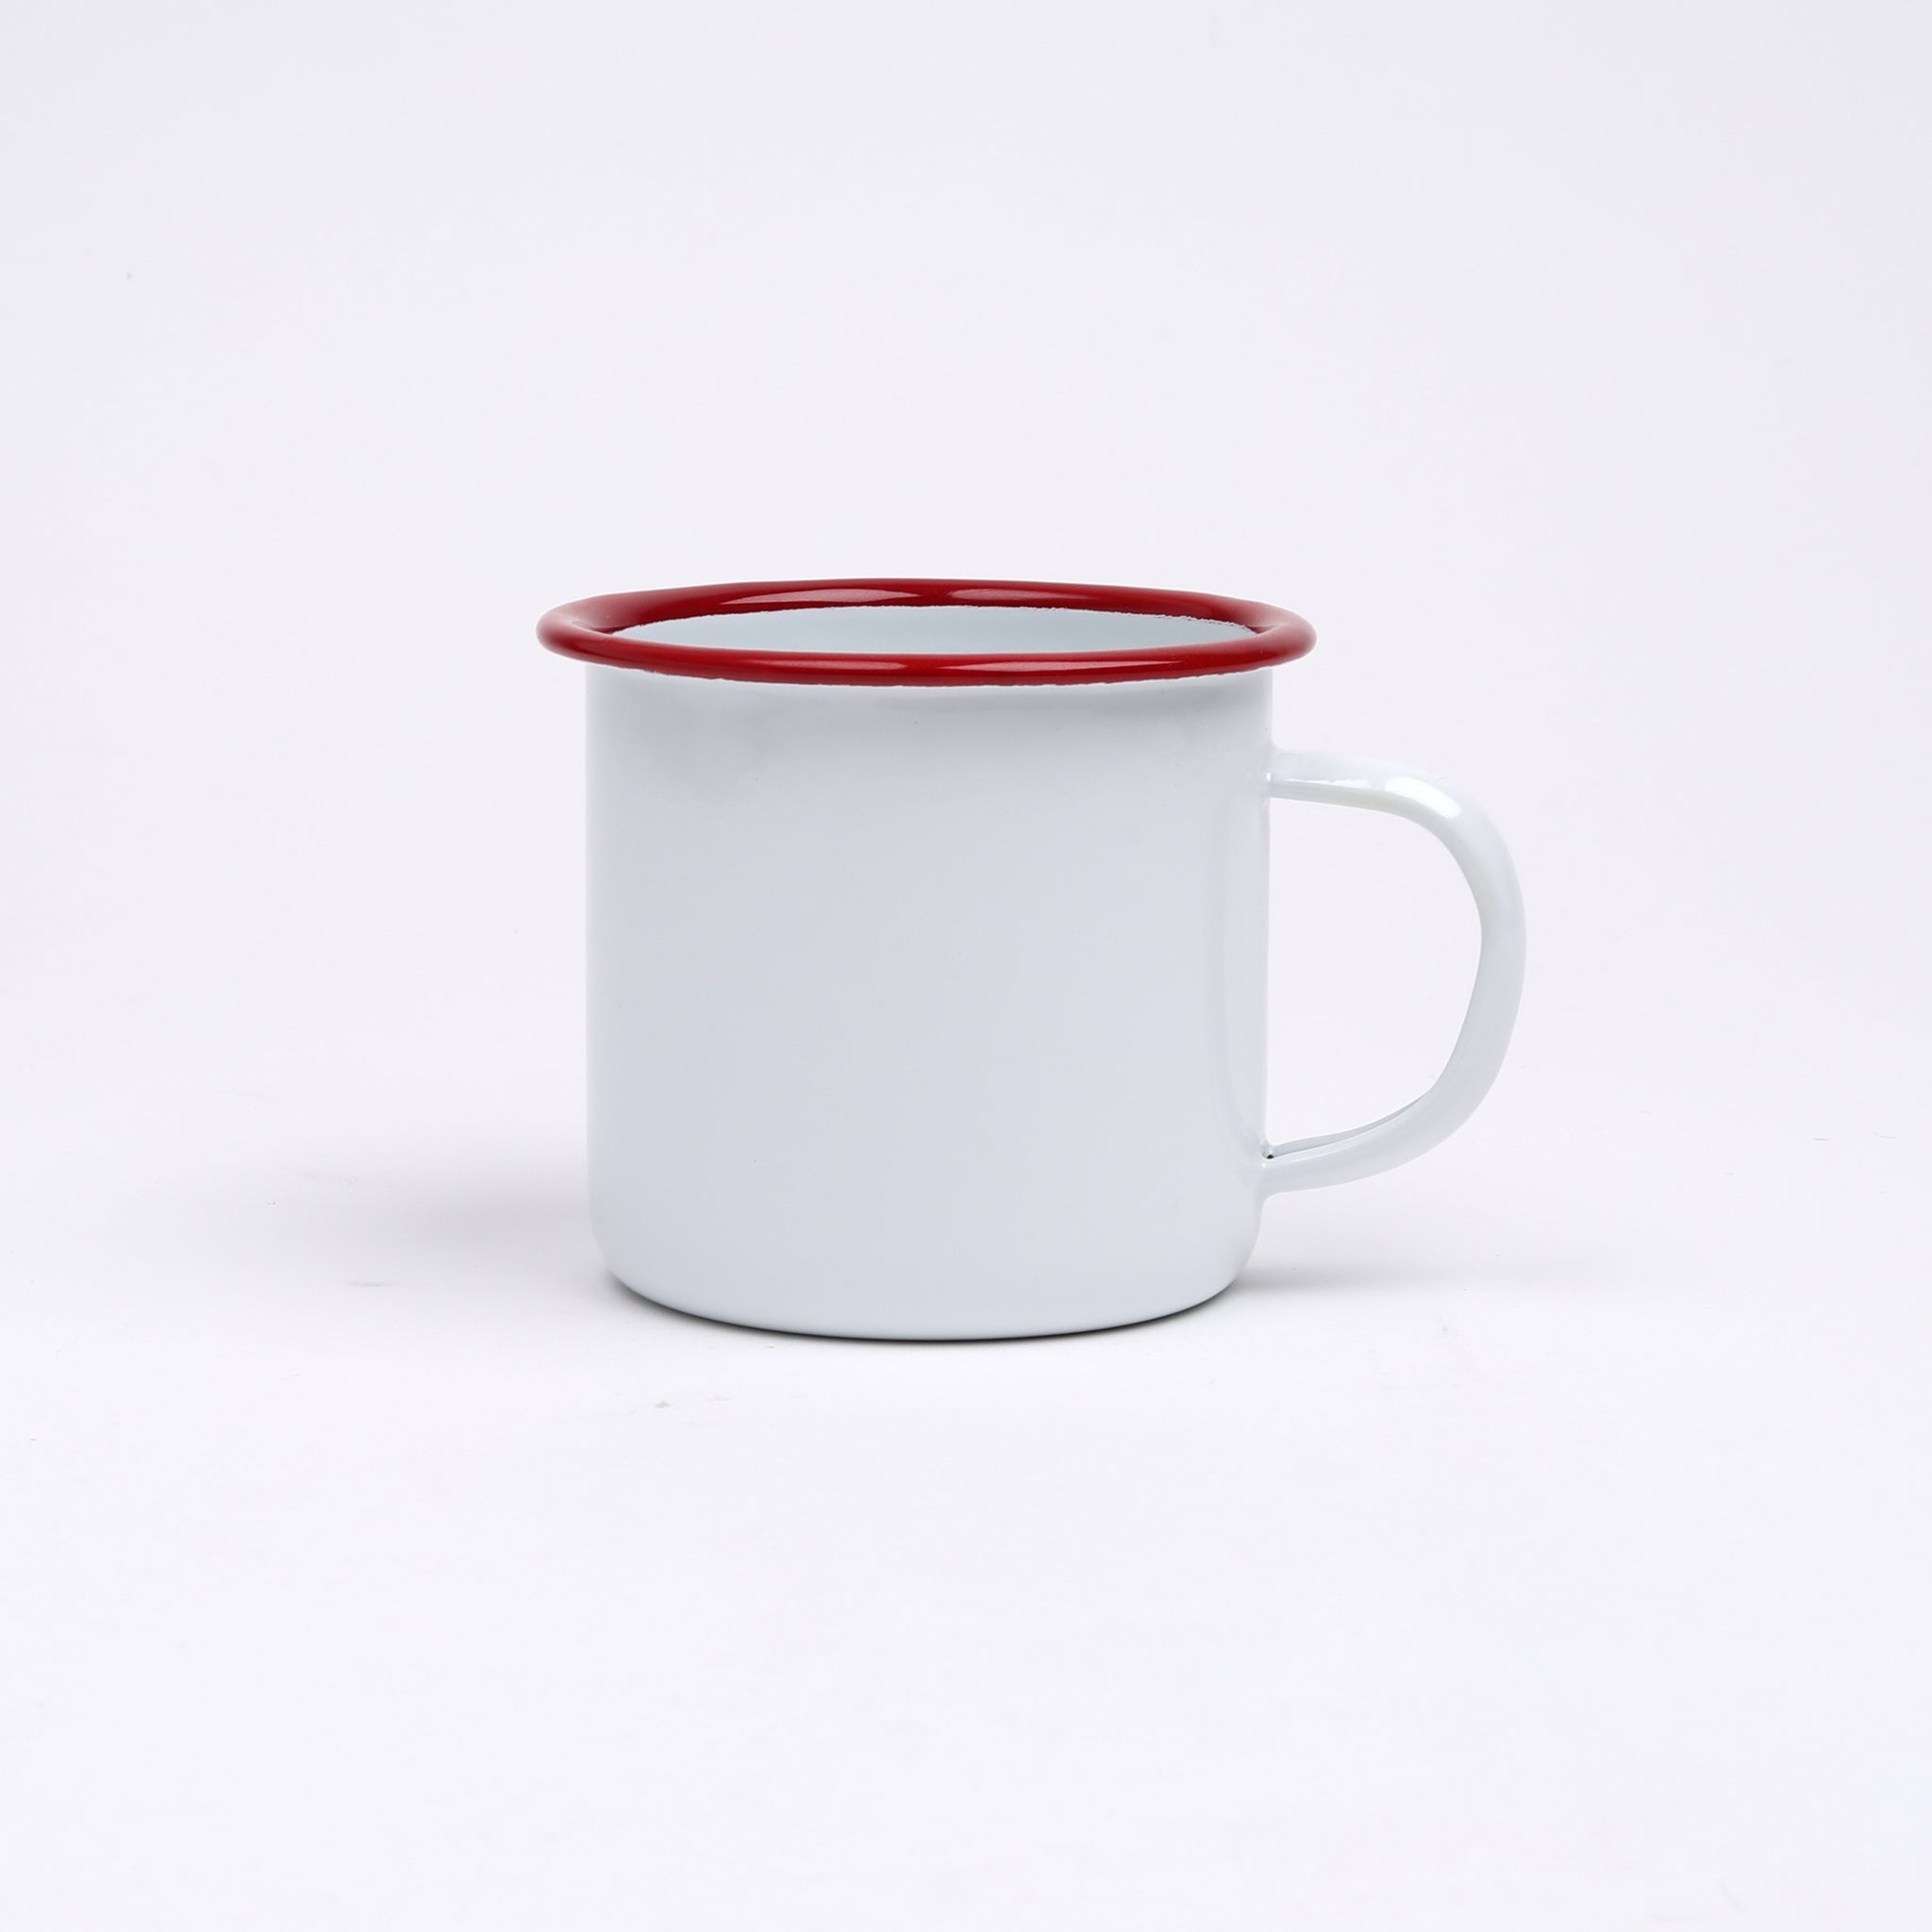 White mug with red rim on white background